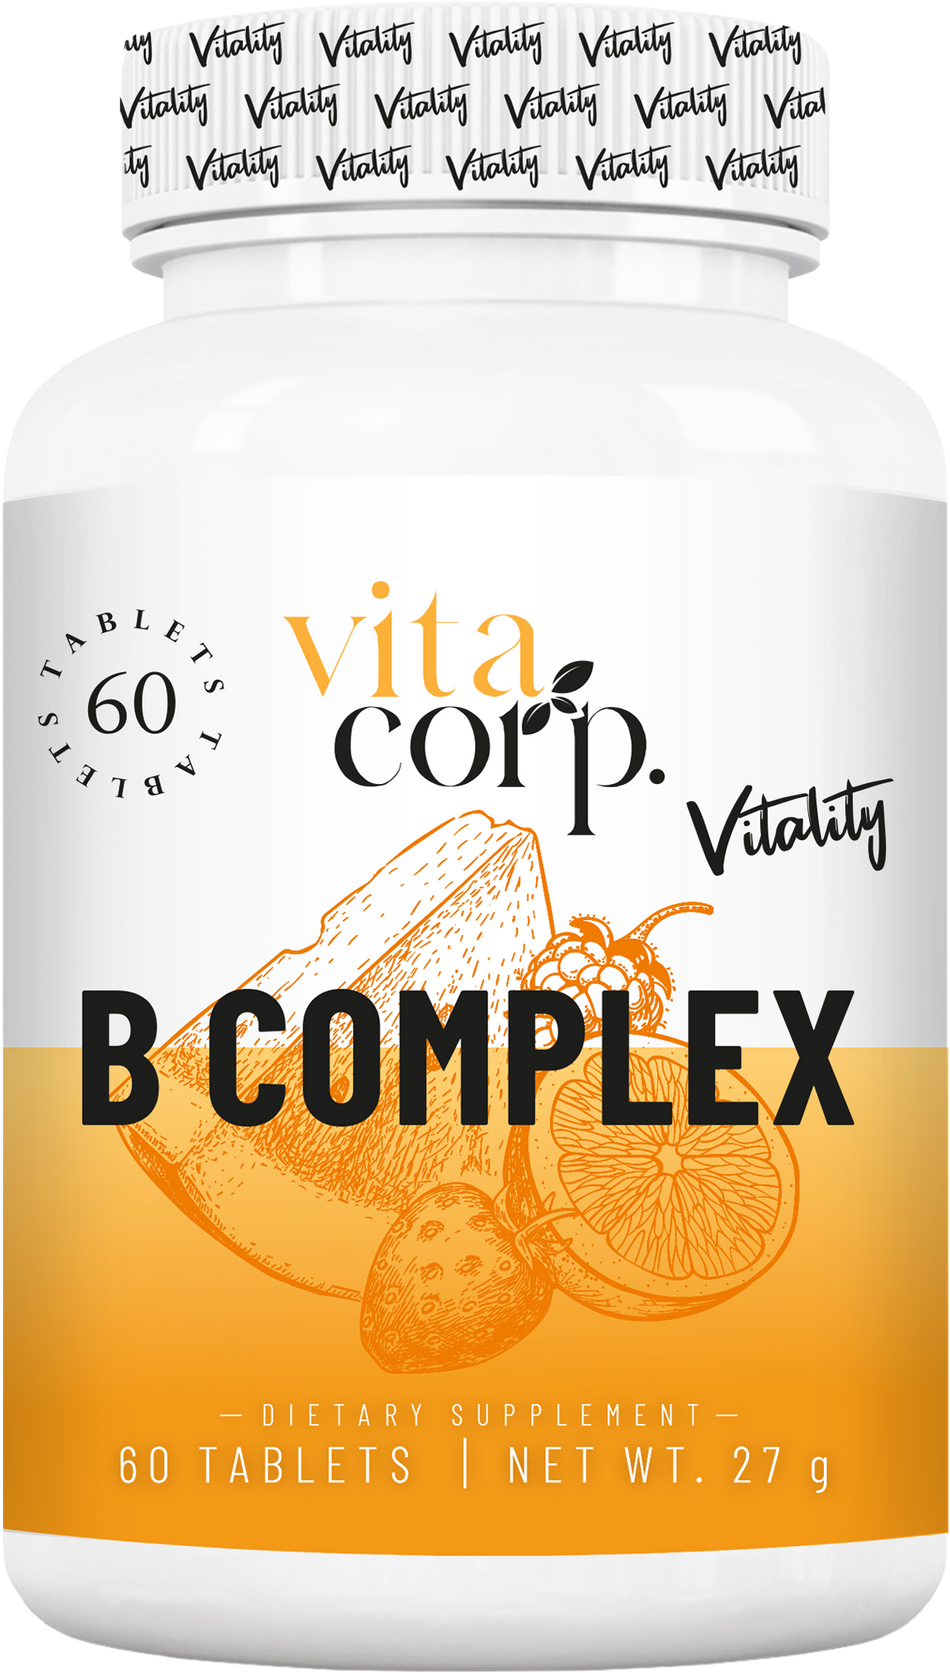 Vitamin B Complex - BadiZdrav.BG